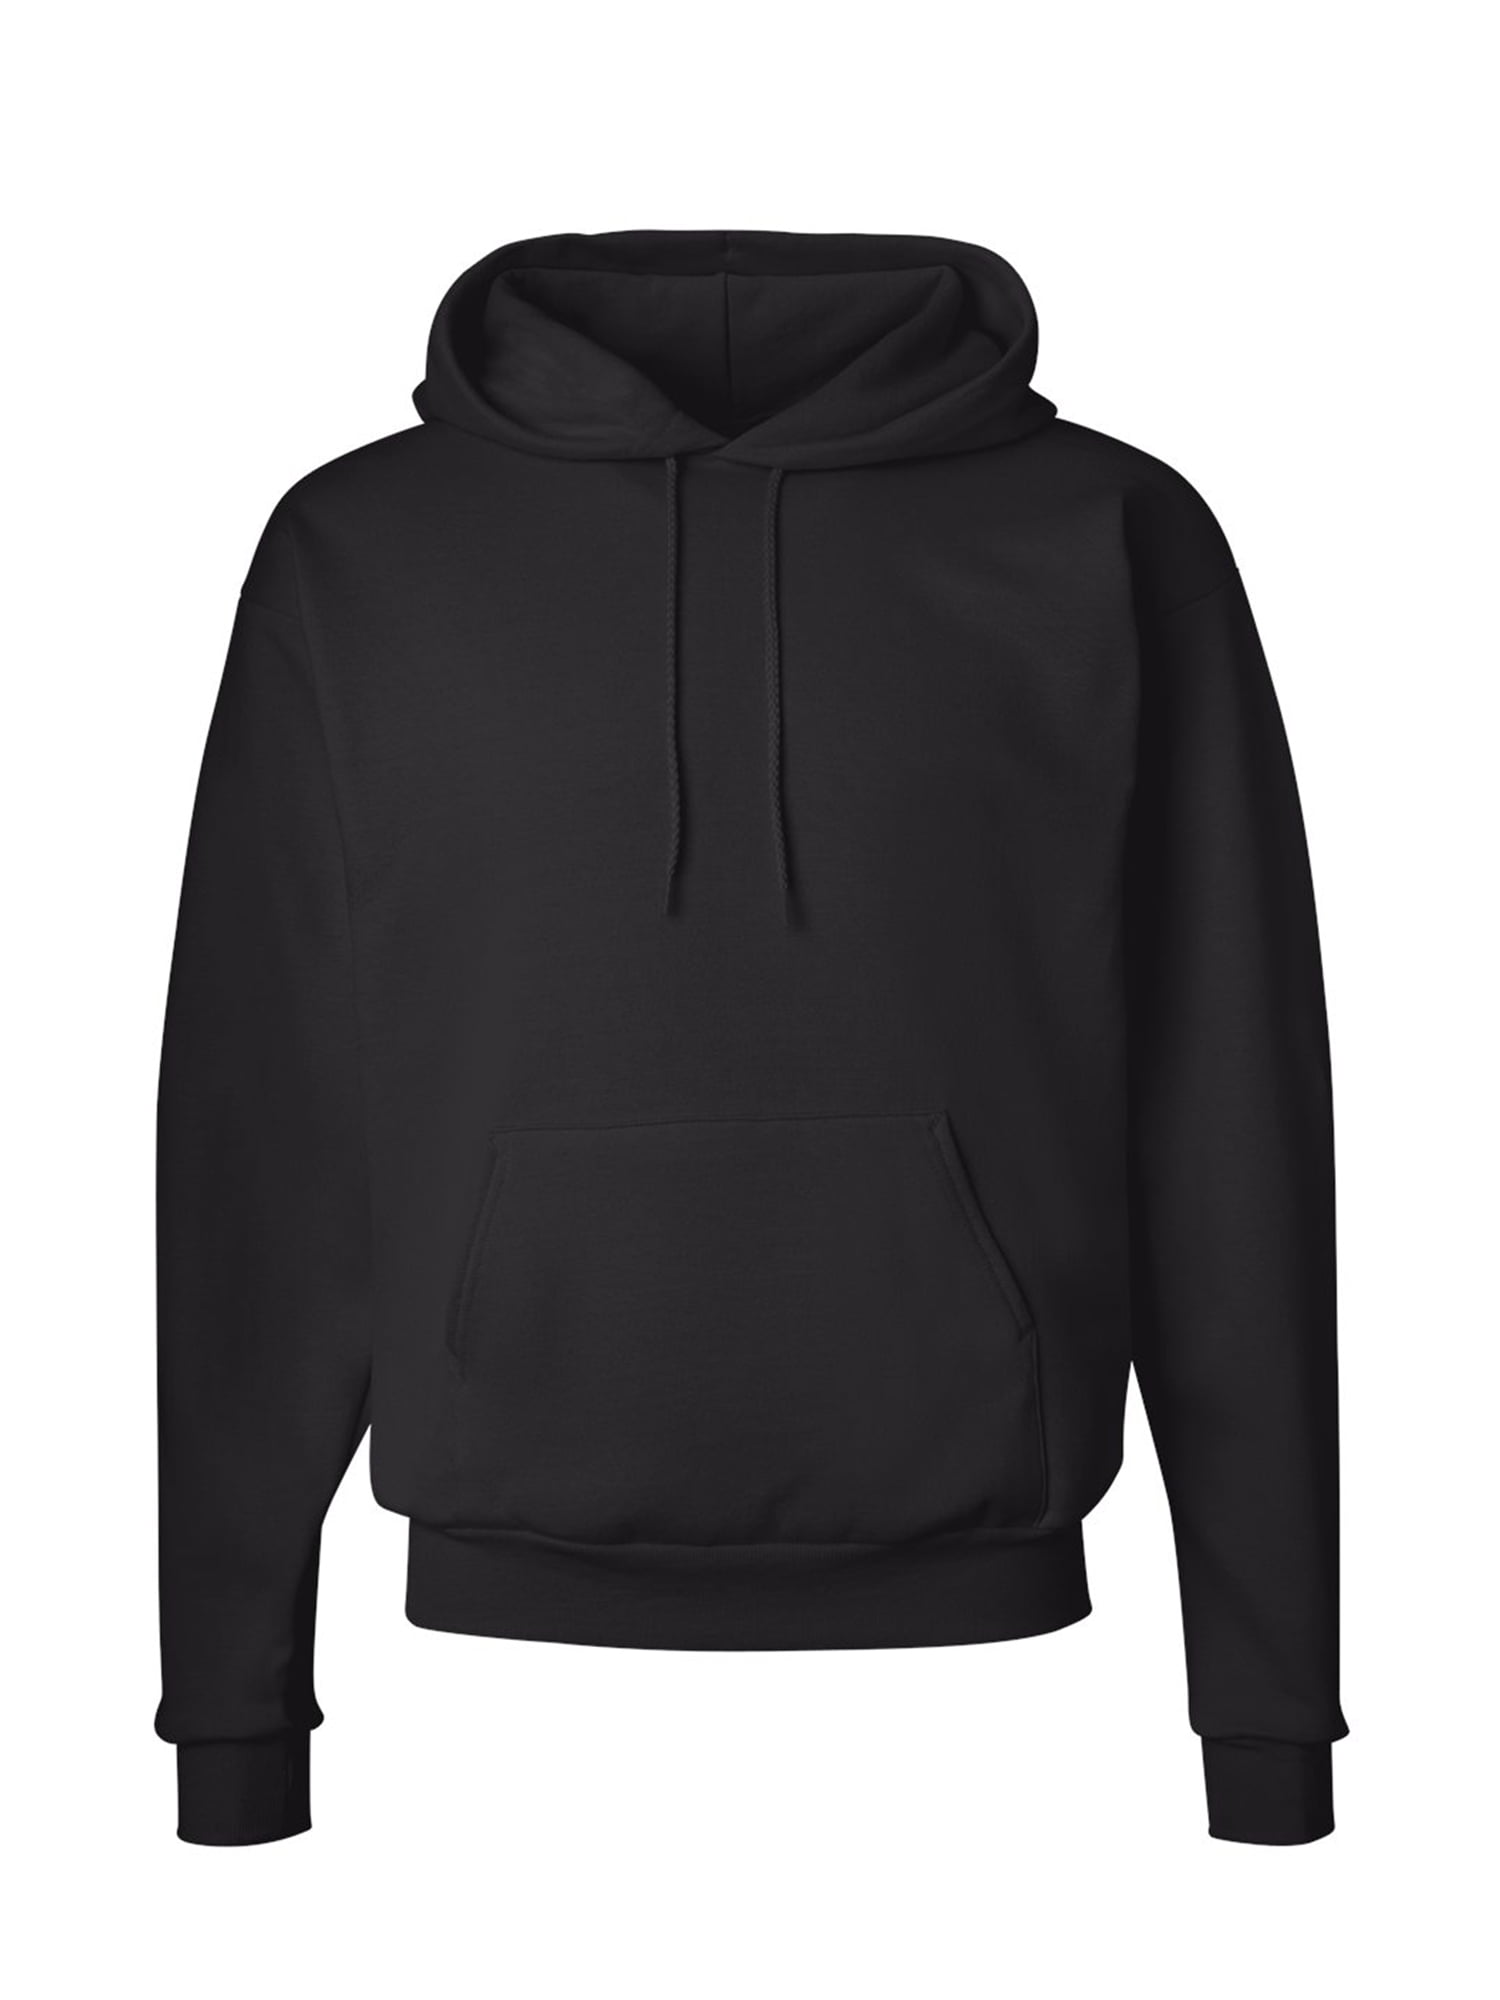 Awkward Styles - Unisex Hanes Ecosmart Hooded Sweatshirt for Men Hanes ...